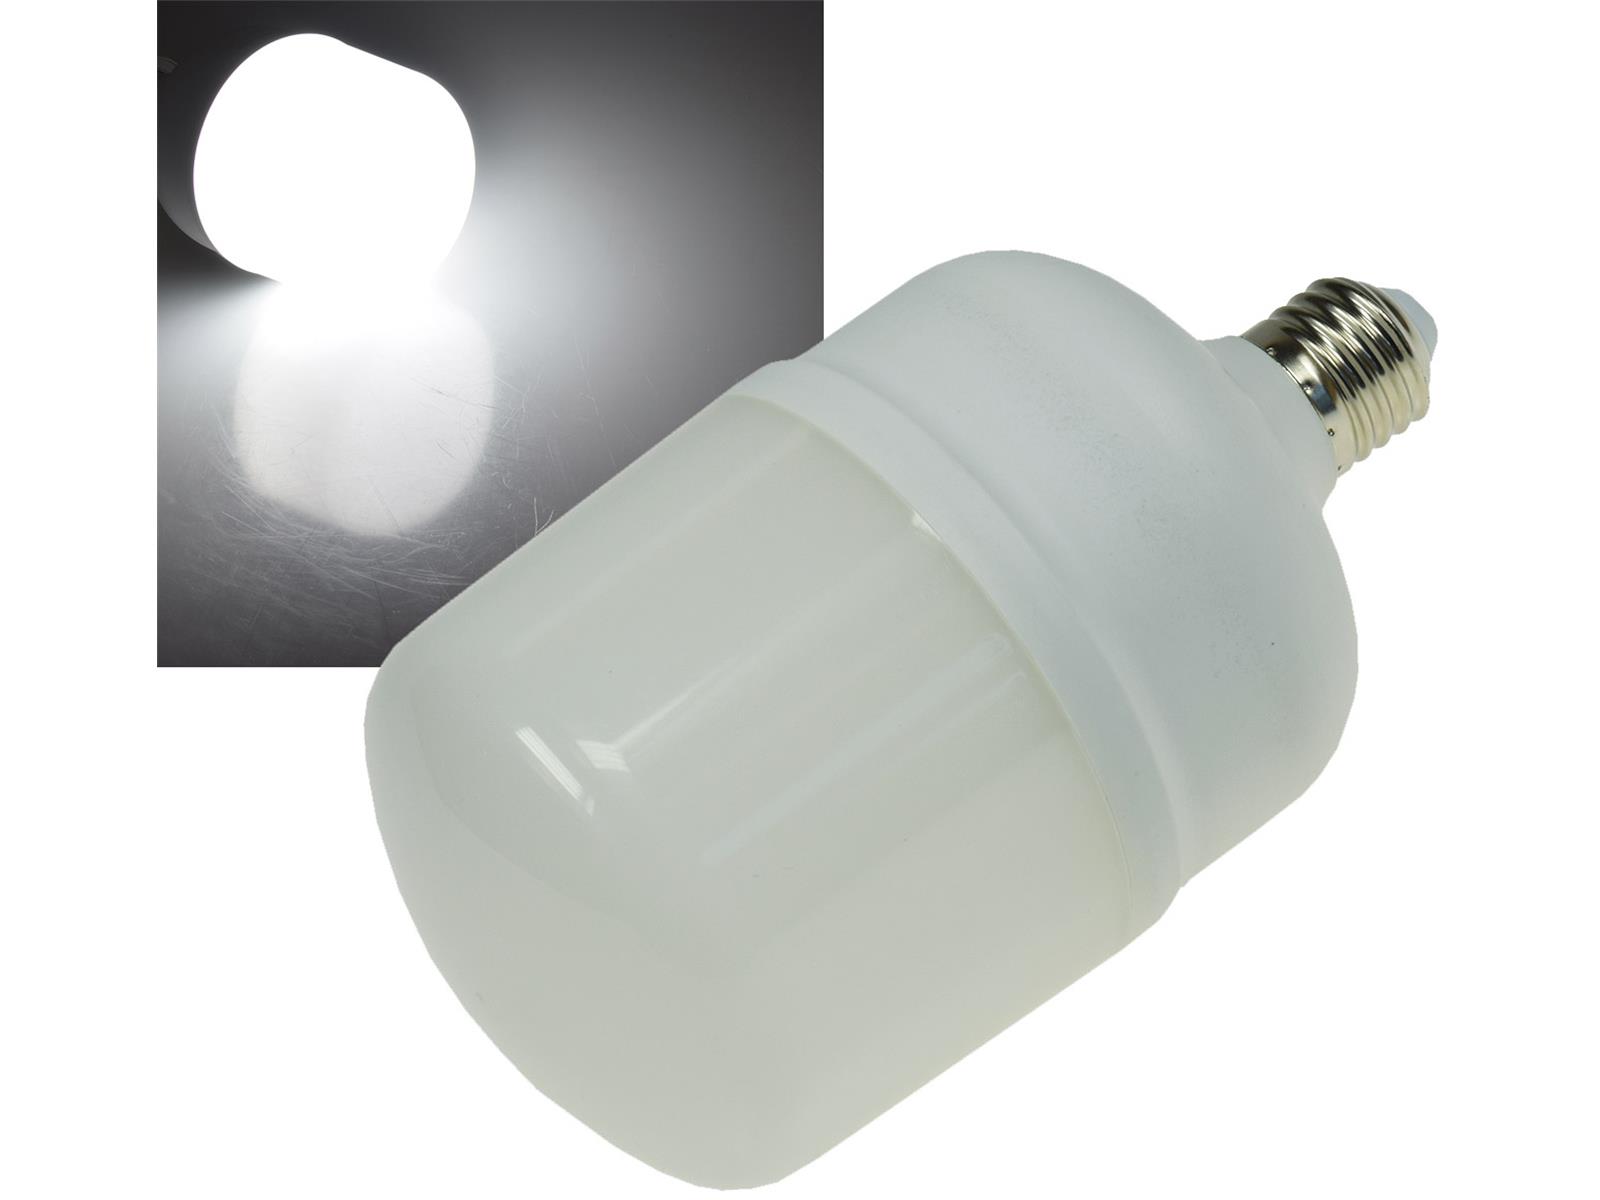 LED Jumbo Lampe E27 24W "G280n"2450lm, 4200K, neutralweiß, ØxH 10x18cm